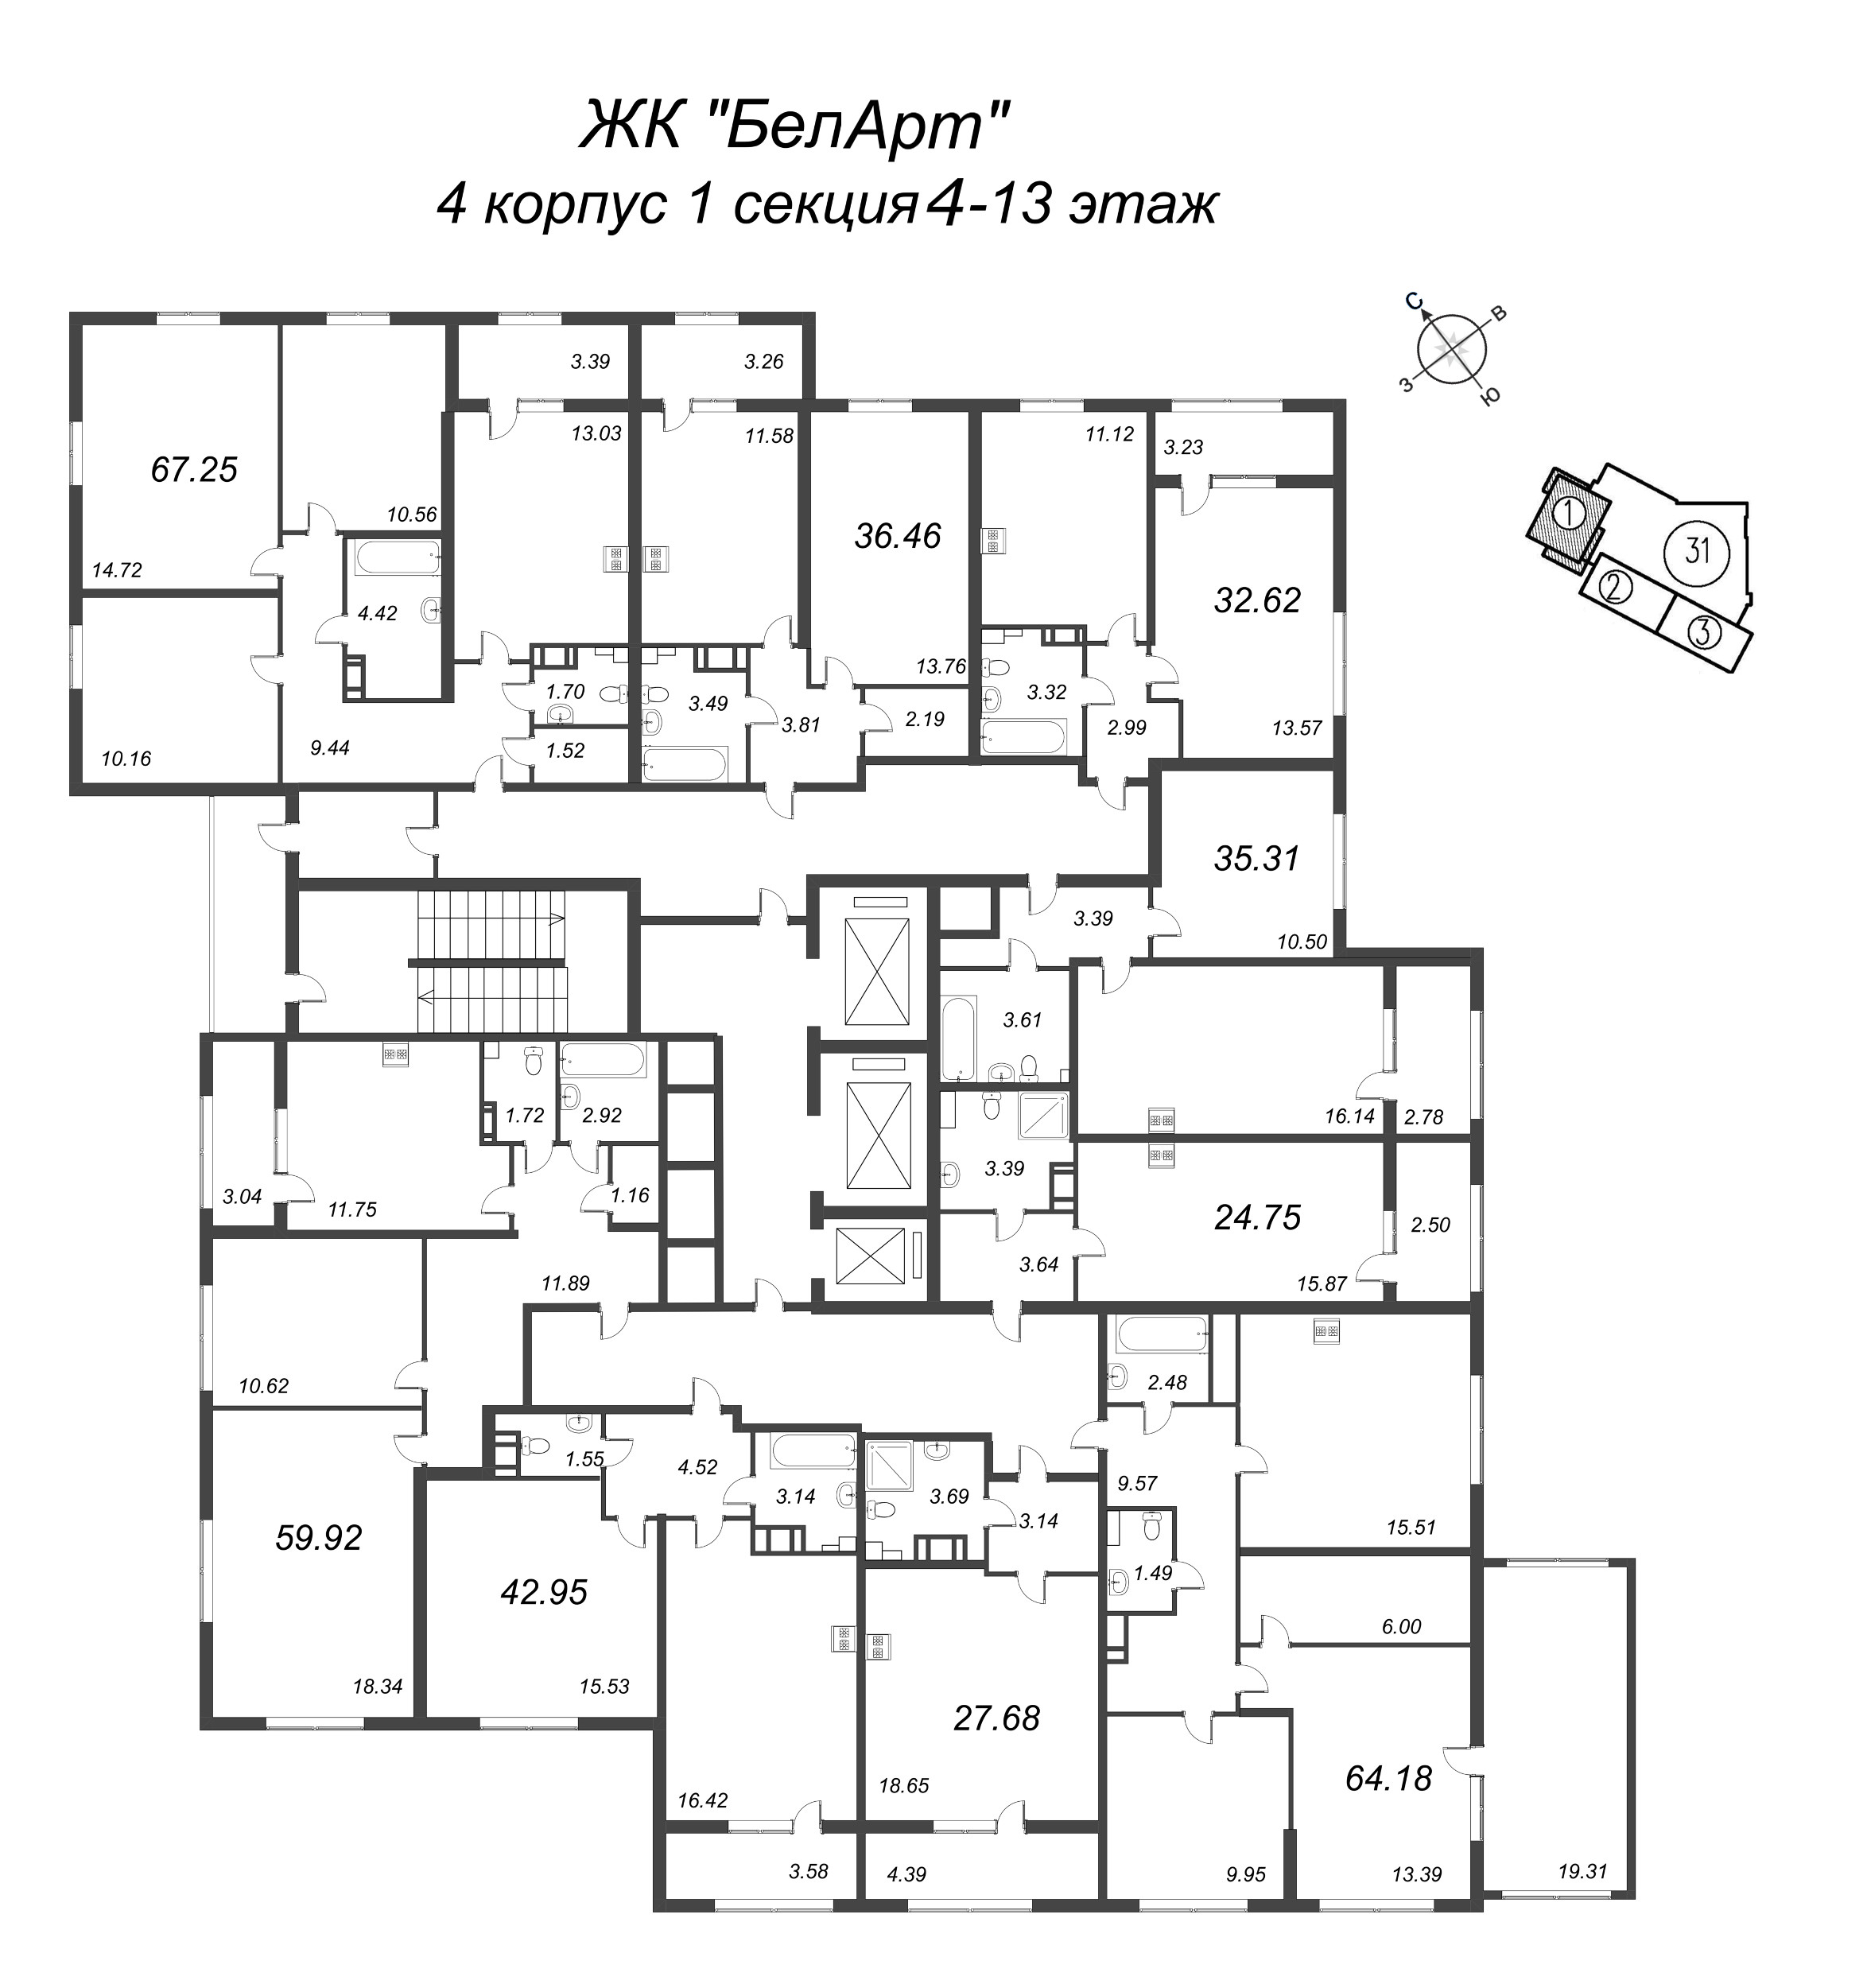 2-комнатная (Евро) квартира, 42.95 м² - планировка этажа